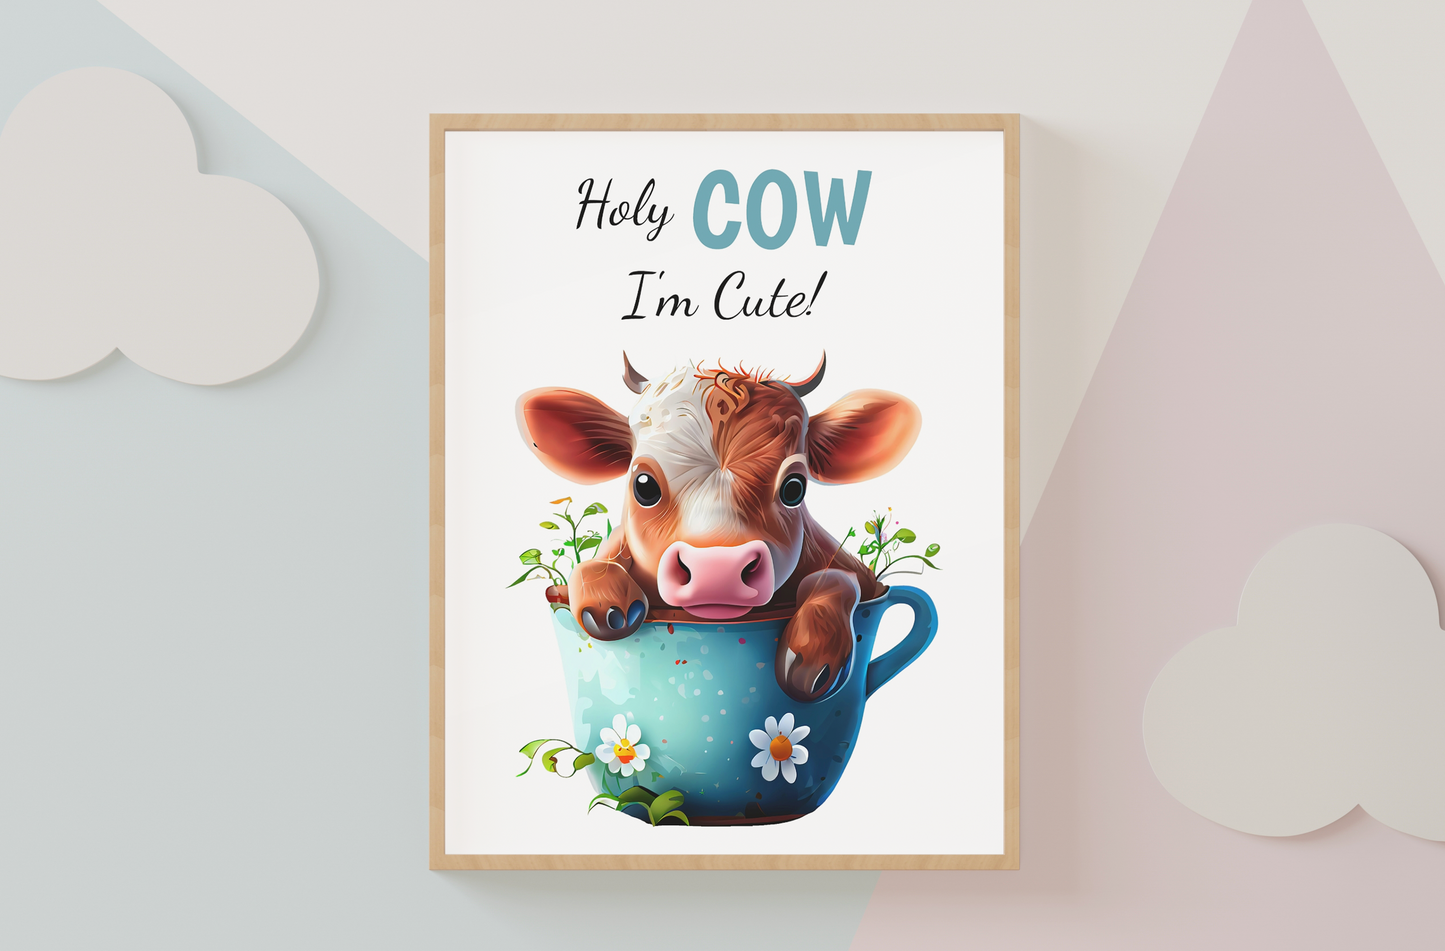 Cow in teacup nursery wall decor, cow nursery poster wall art, holy cow I’m cute nursery quote wall art print